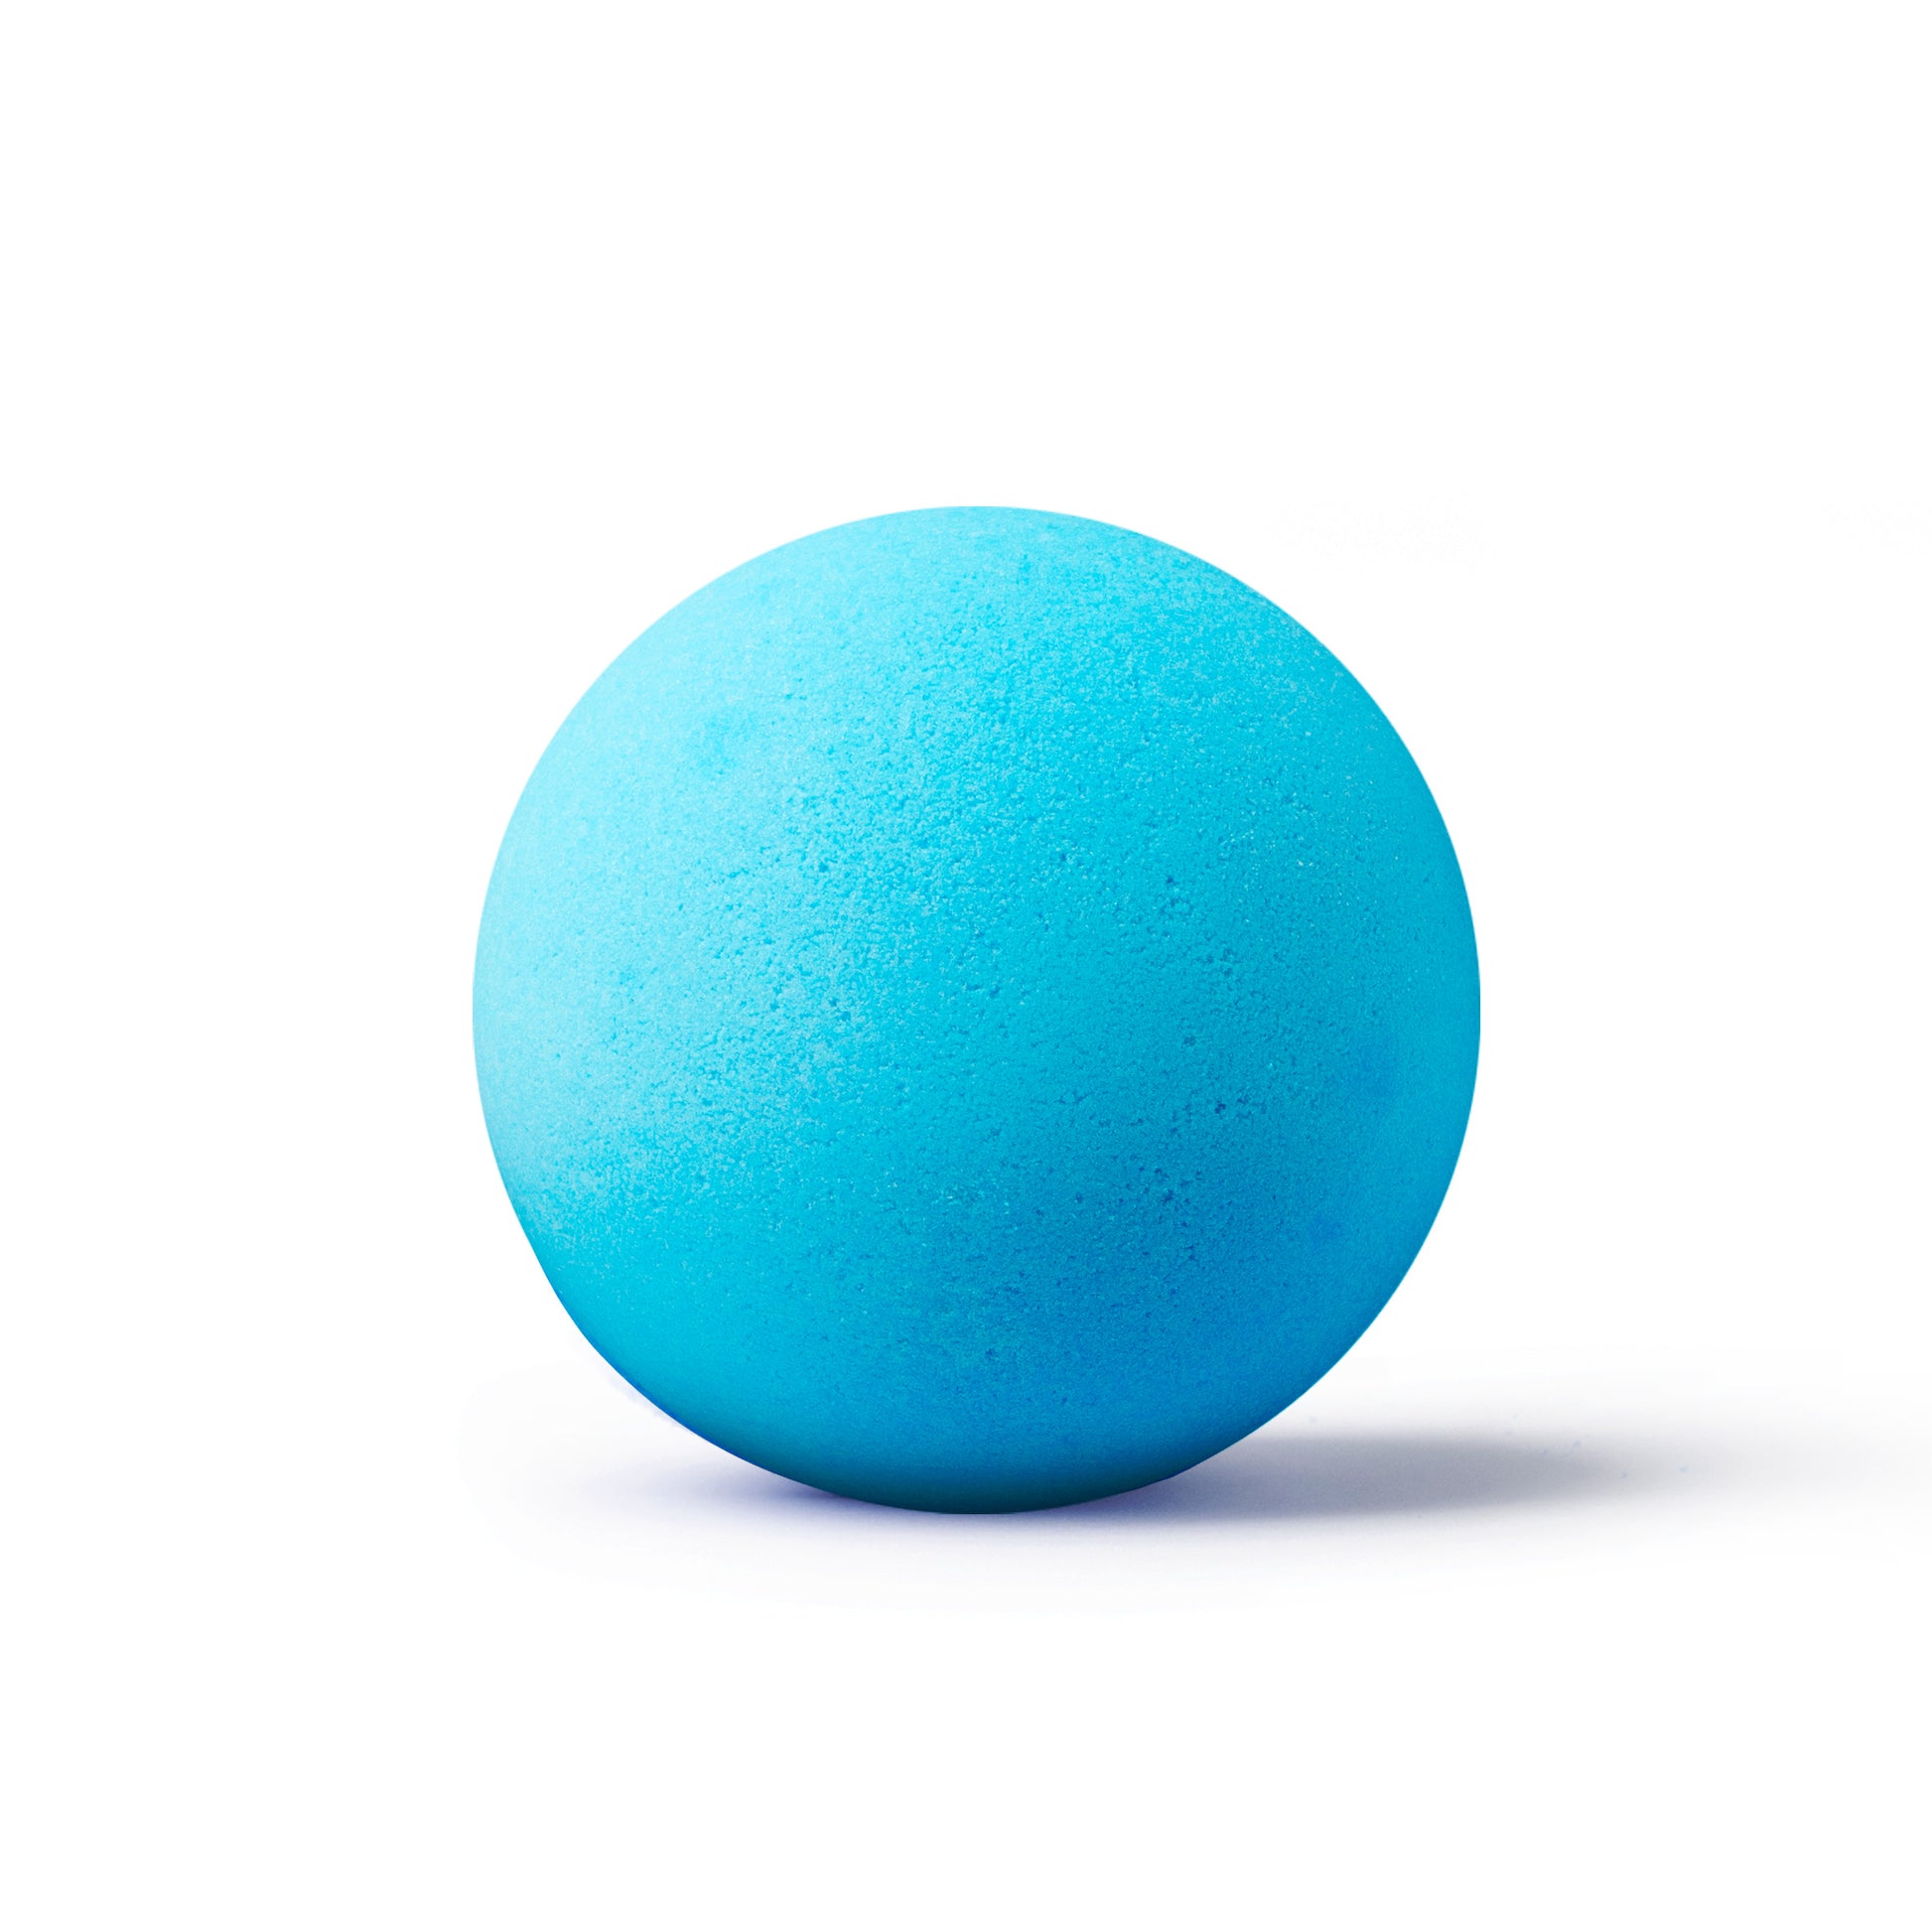 a blue bath bomb on white background